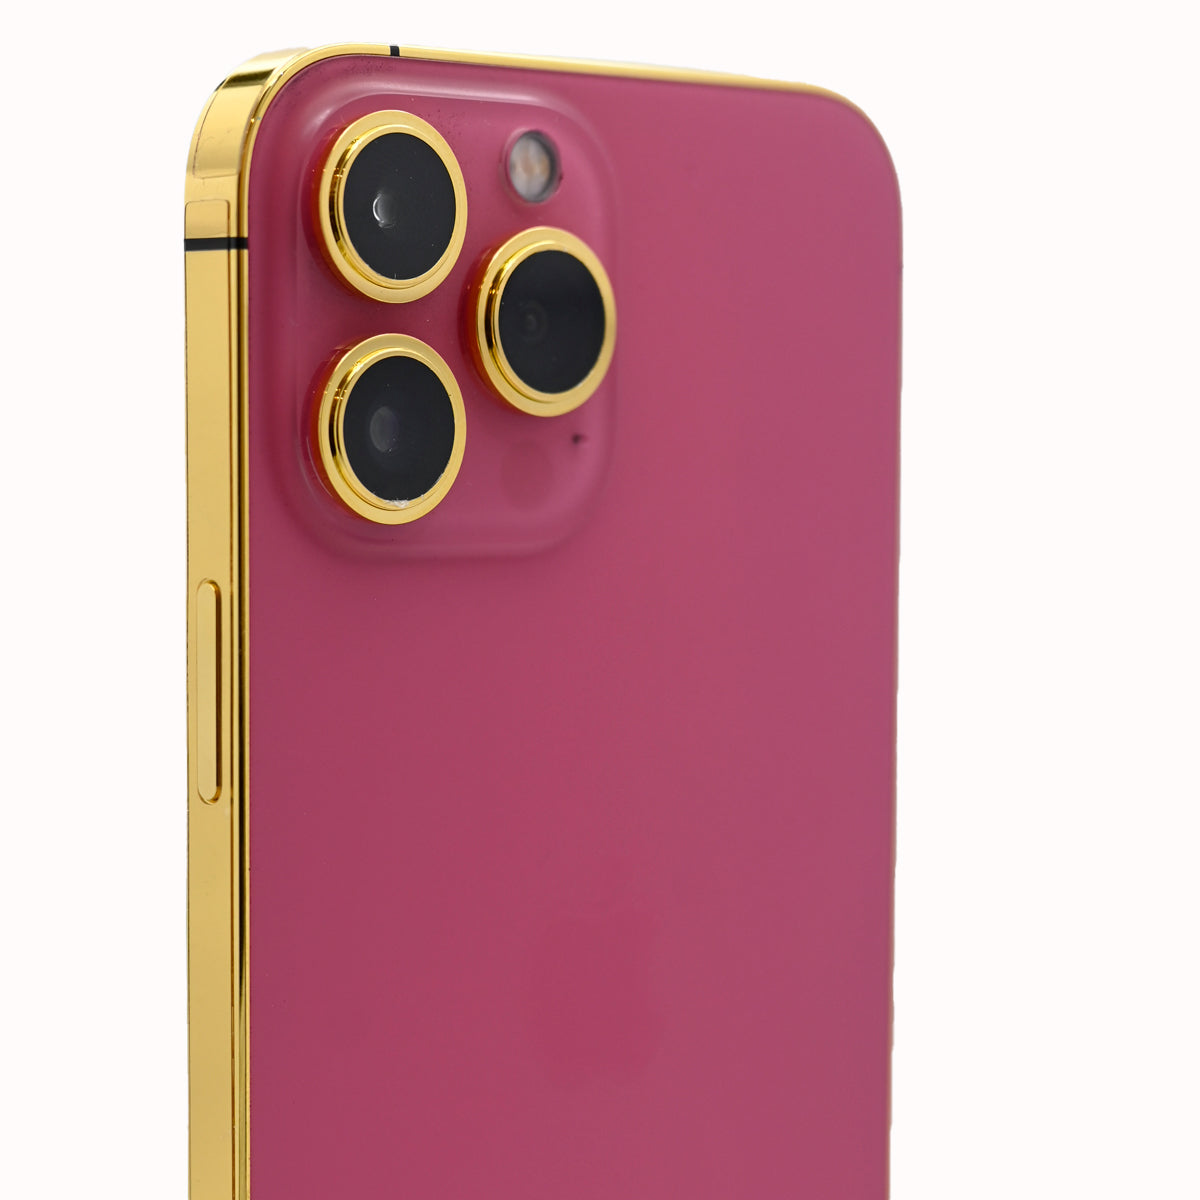 Caviar Luxury Customized 24k Gold Frame iPhone 13 Pro - Pink 256 GB